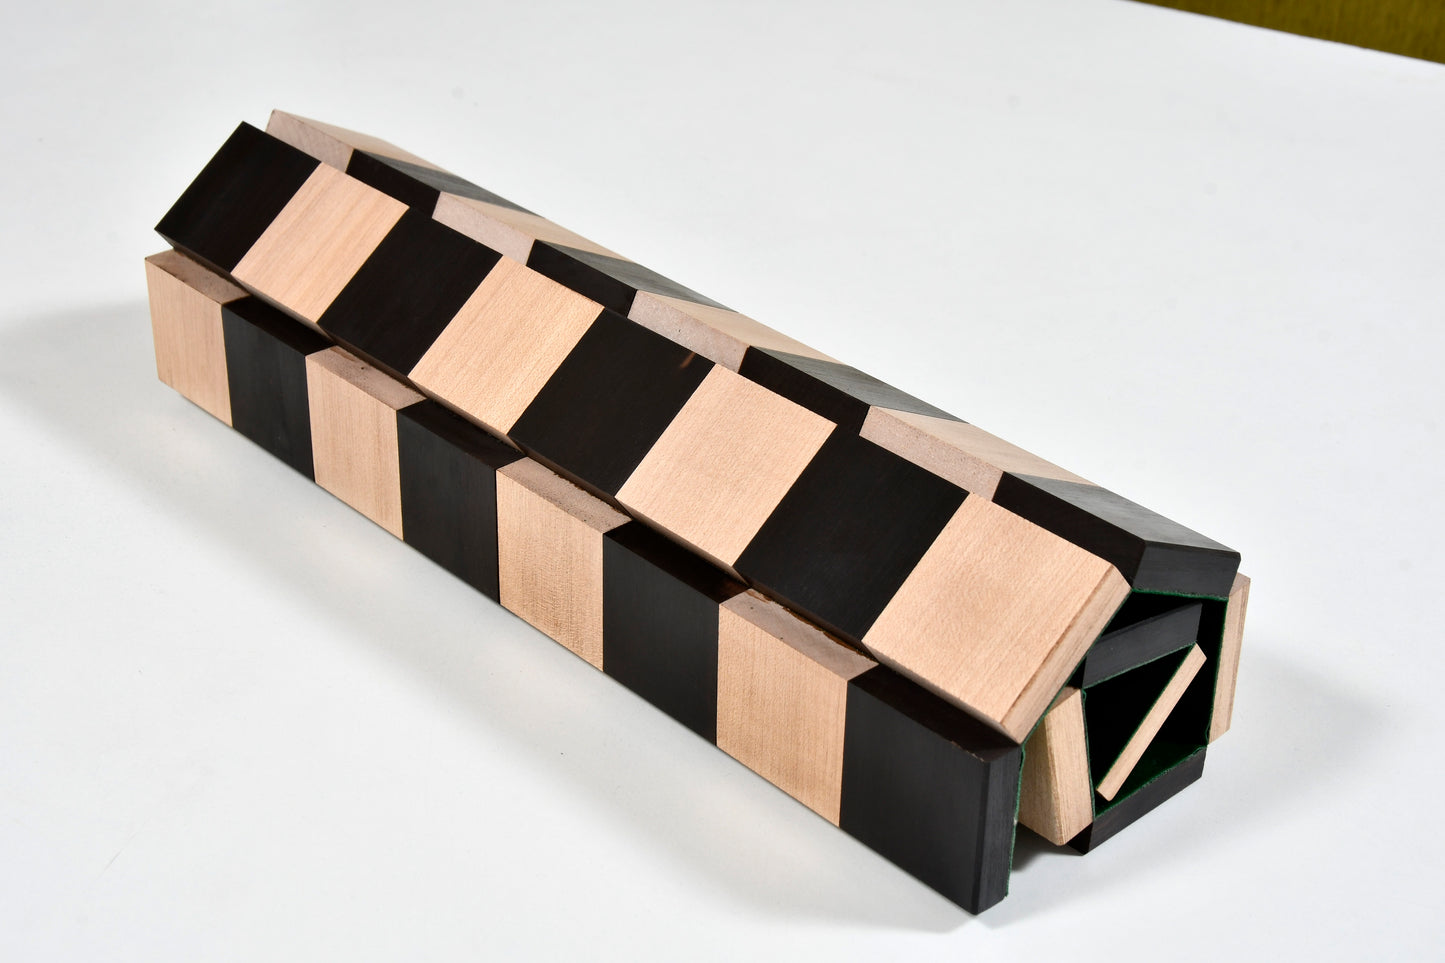 Folding Solid Wood Chess Board in Ebony Wood & Maple Wood - 12.5" - 40mm